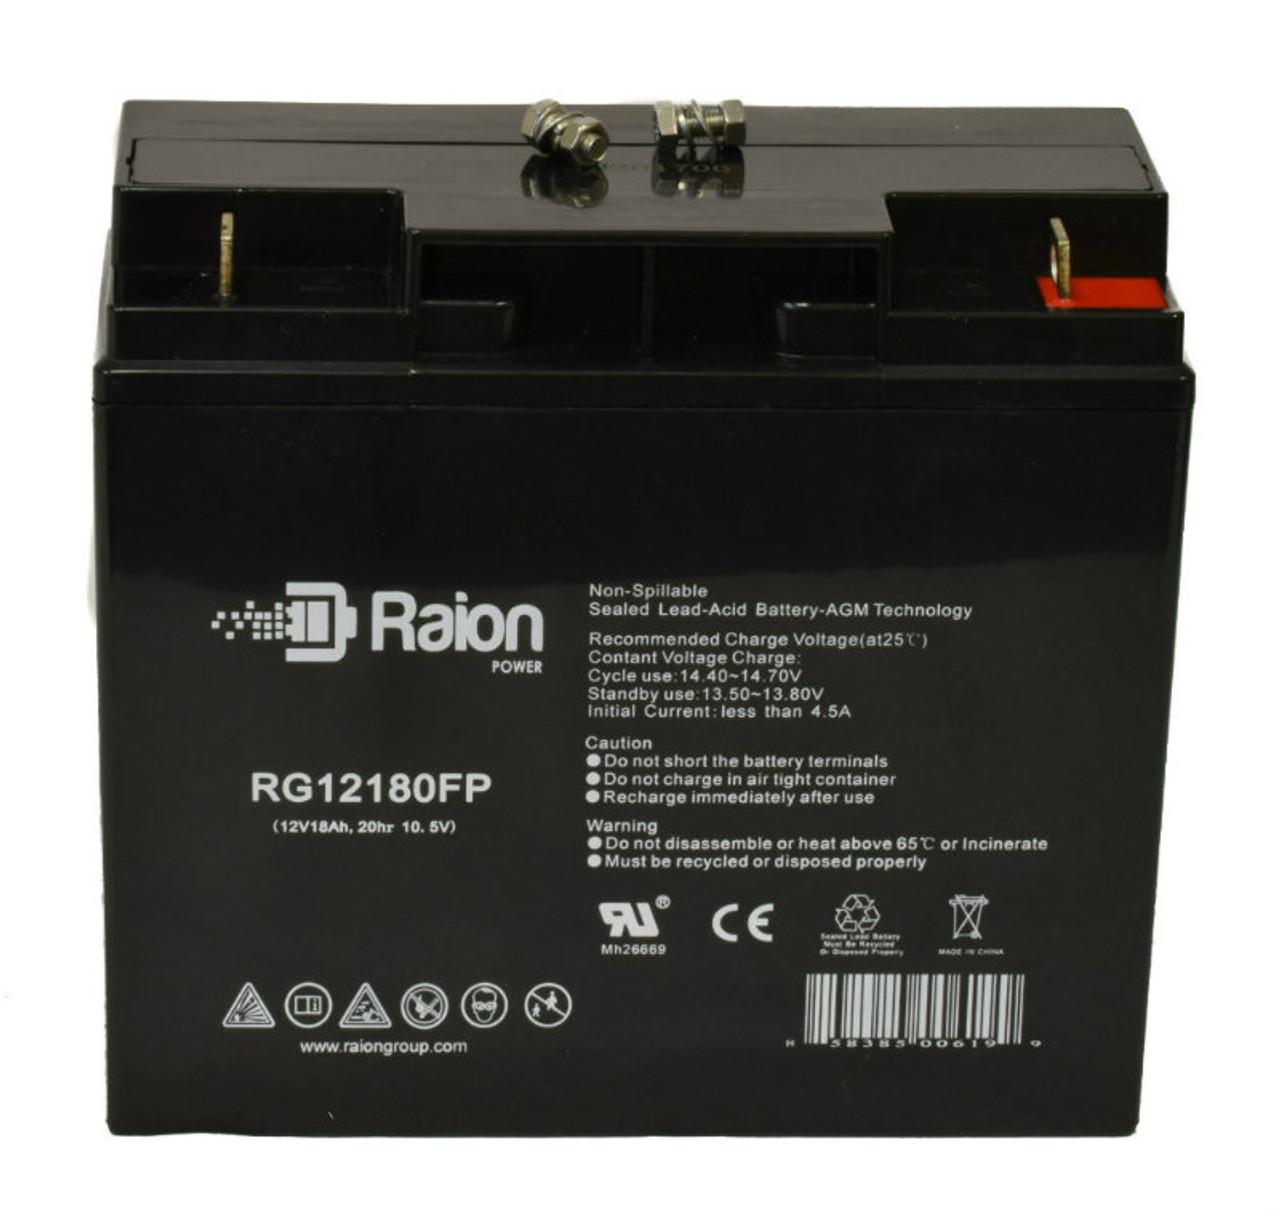 Raion Power RG12180FP 12V 18Ah Lead Acid Battery for Motorino XMb